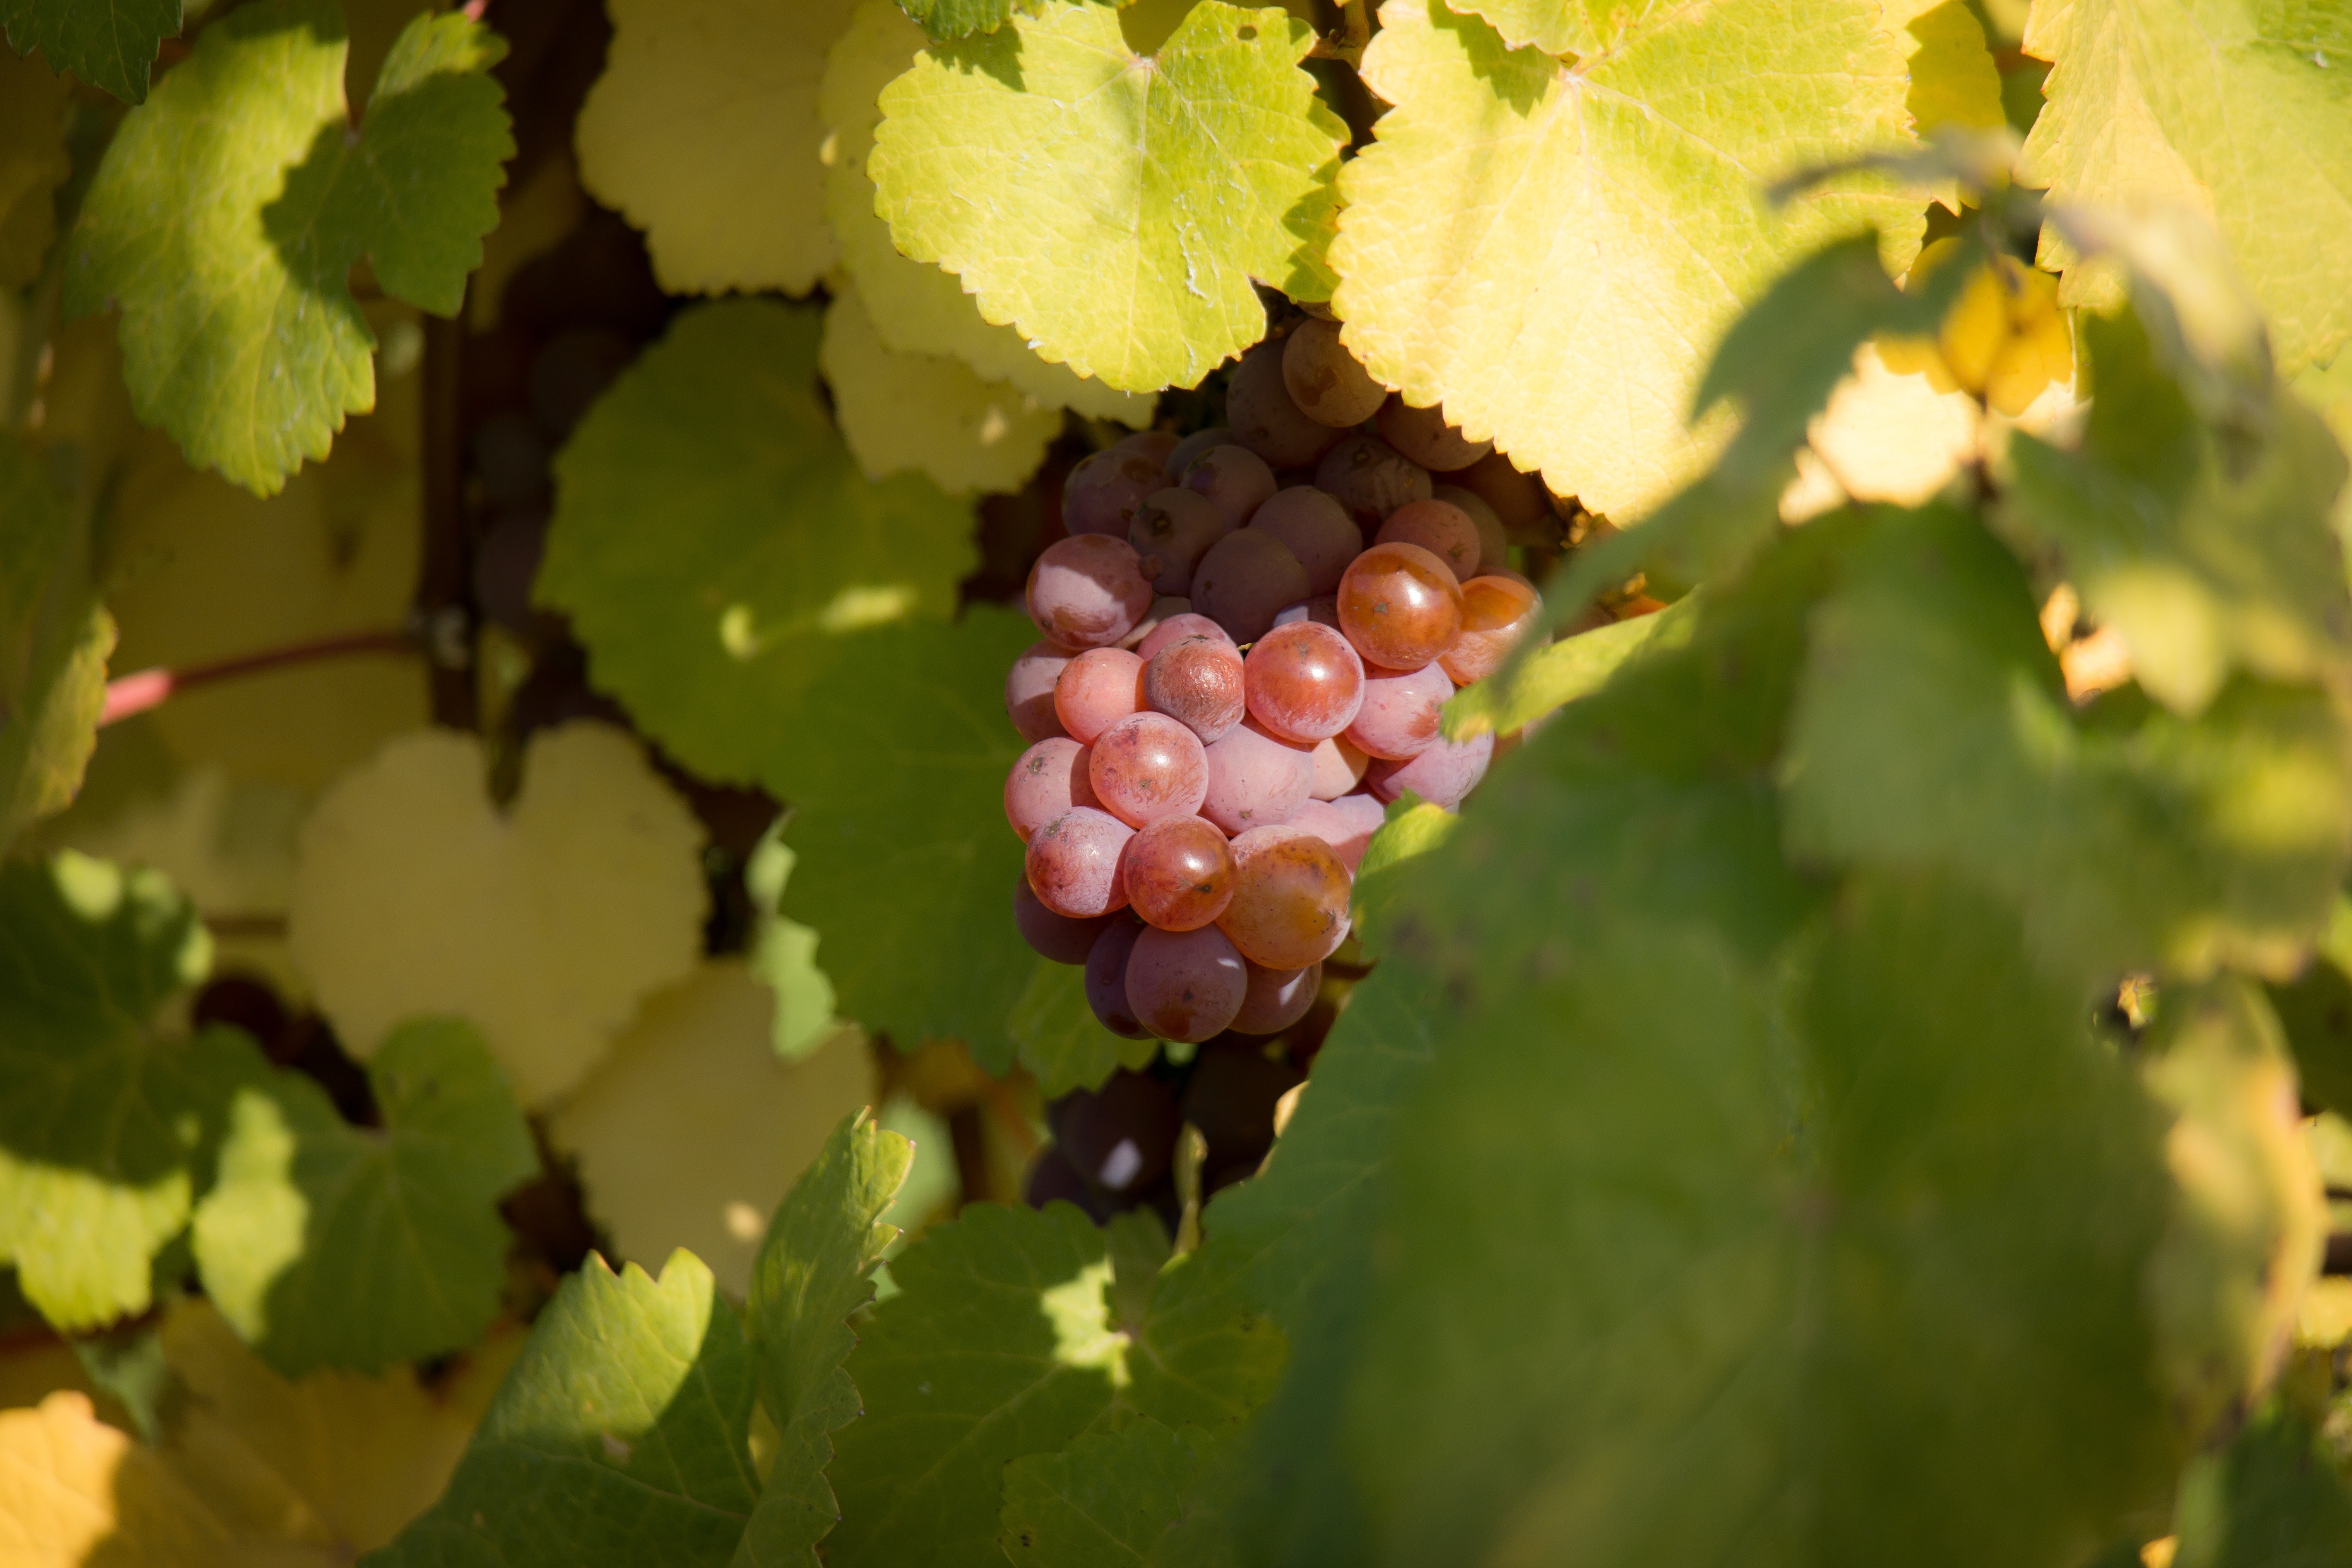 Vine, Autumn, Wine, Green, Grapes, Leaf, food and drink, leaf